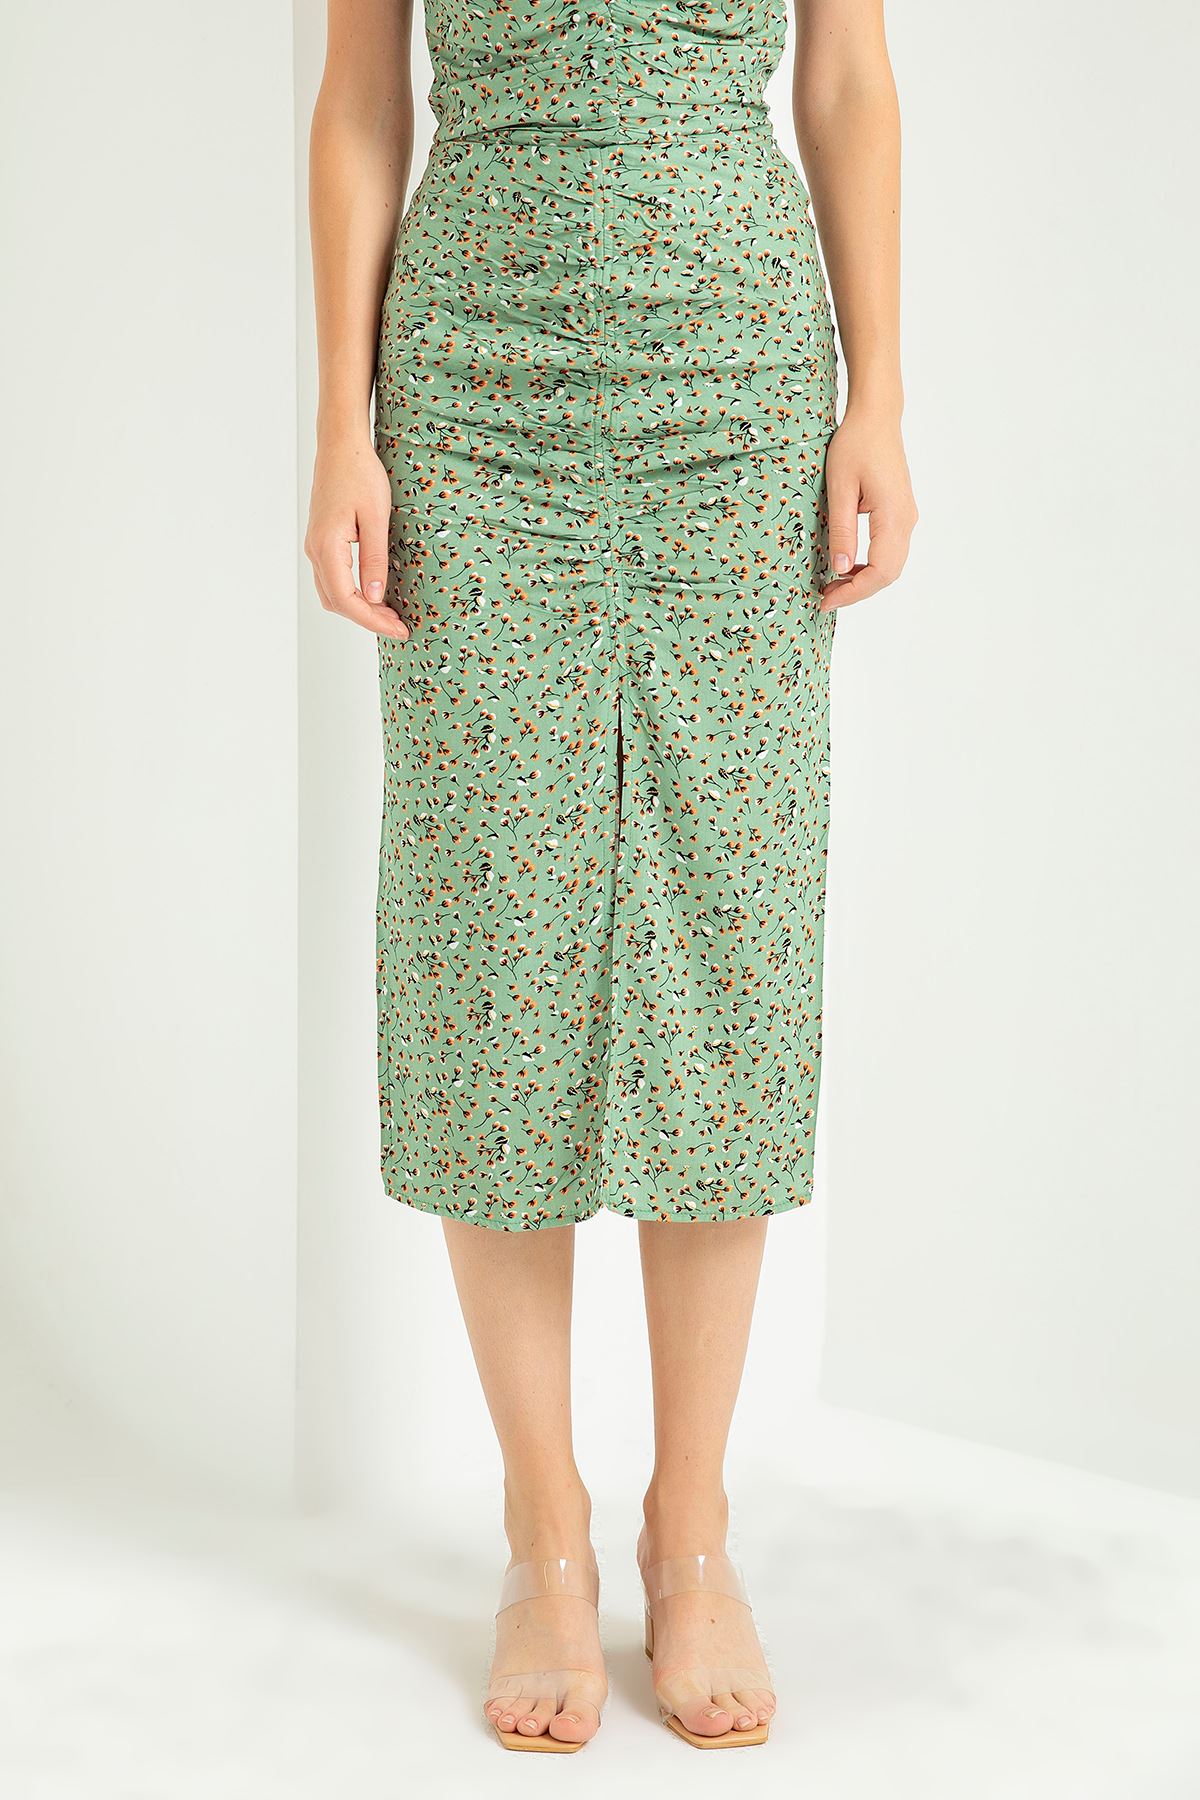 Below Knee Straight Crispy Floral Print Shirred Women'S Skirt - Mint